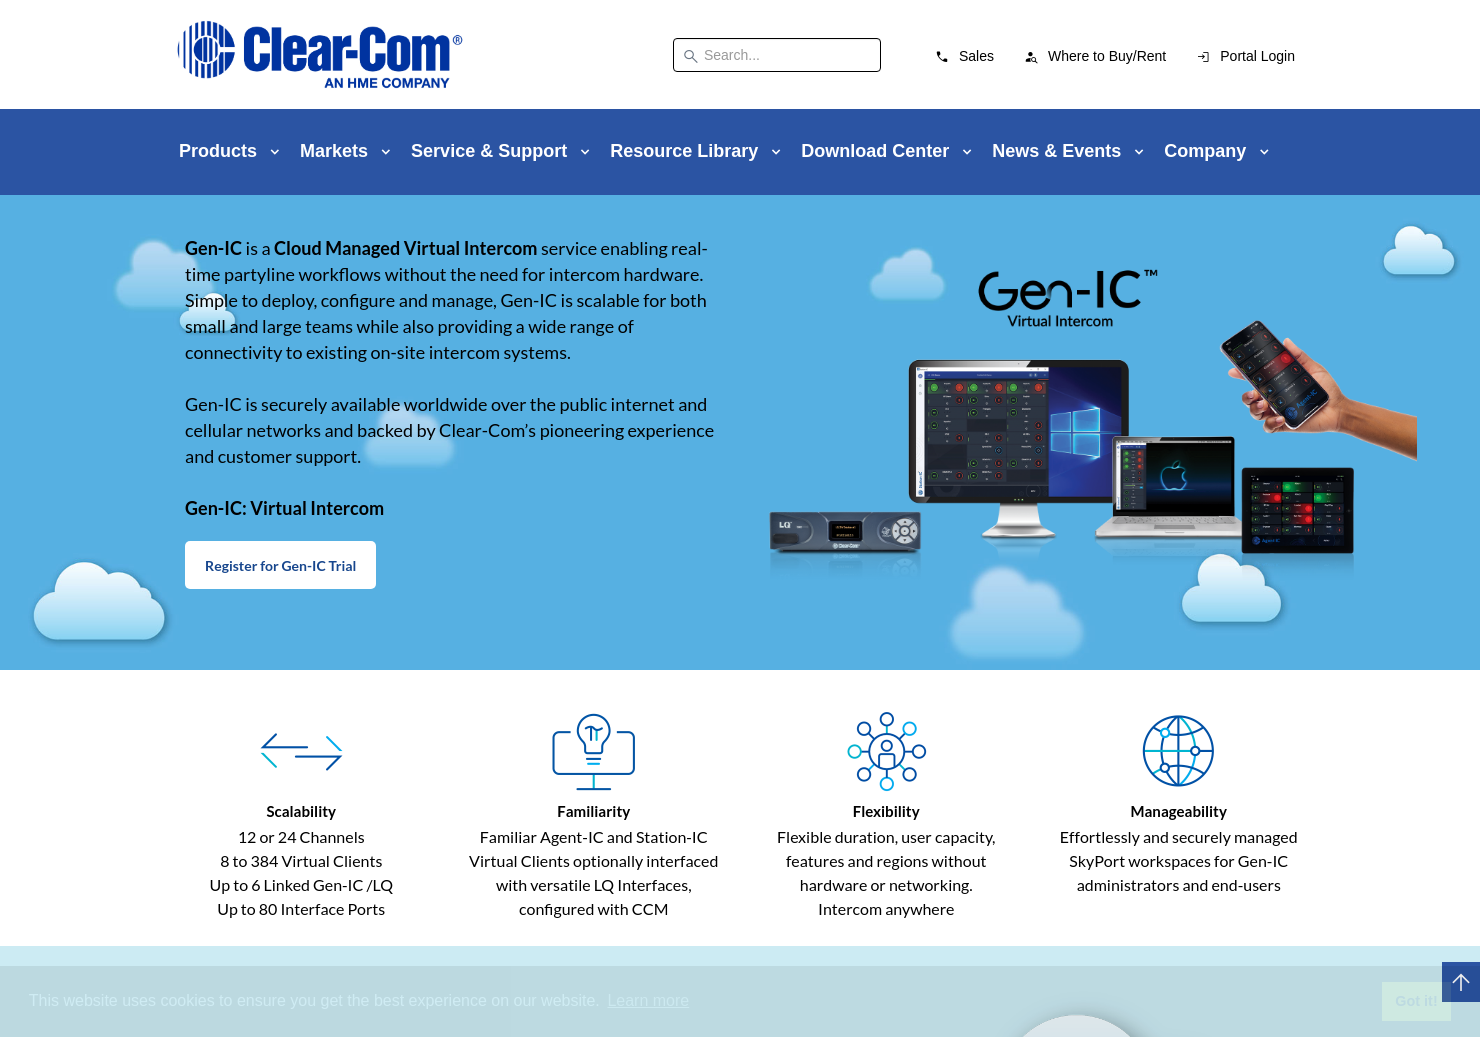 Clear-Com - Gen-IC Cloud Managed Virtual Intercom Service